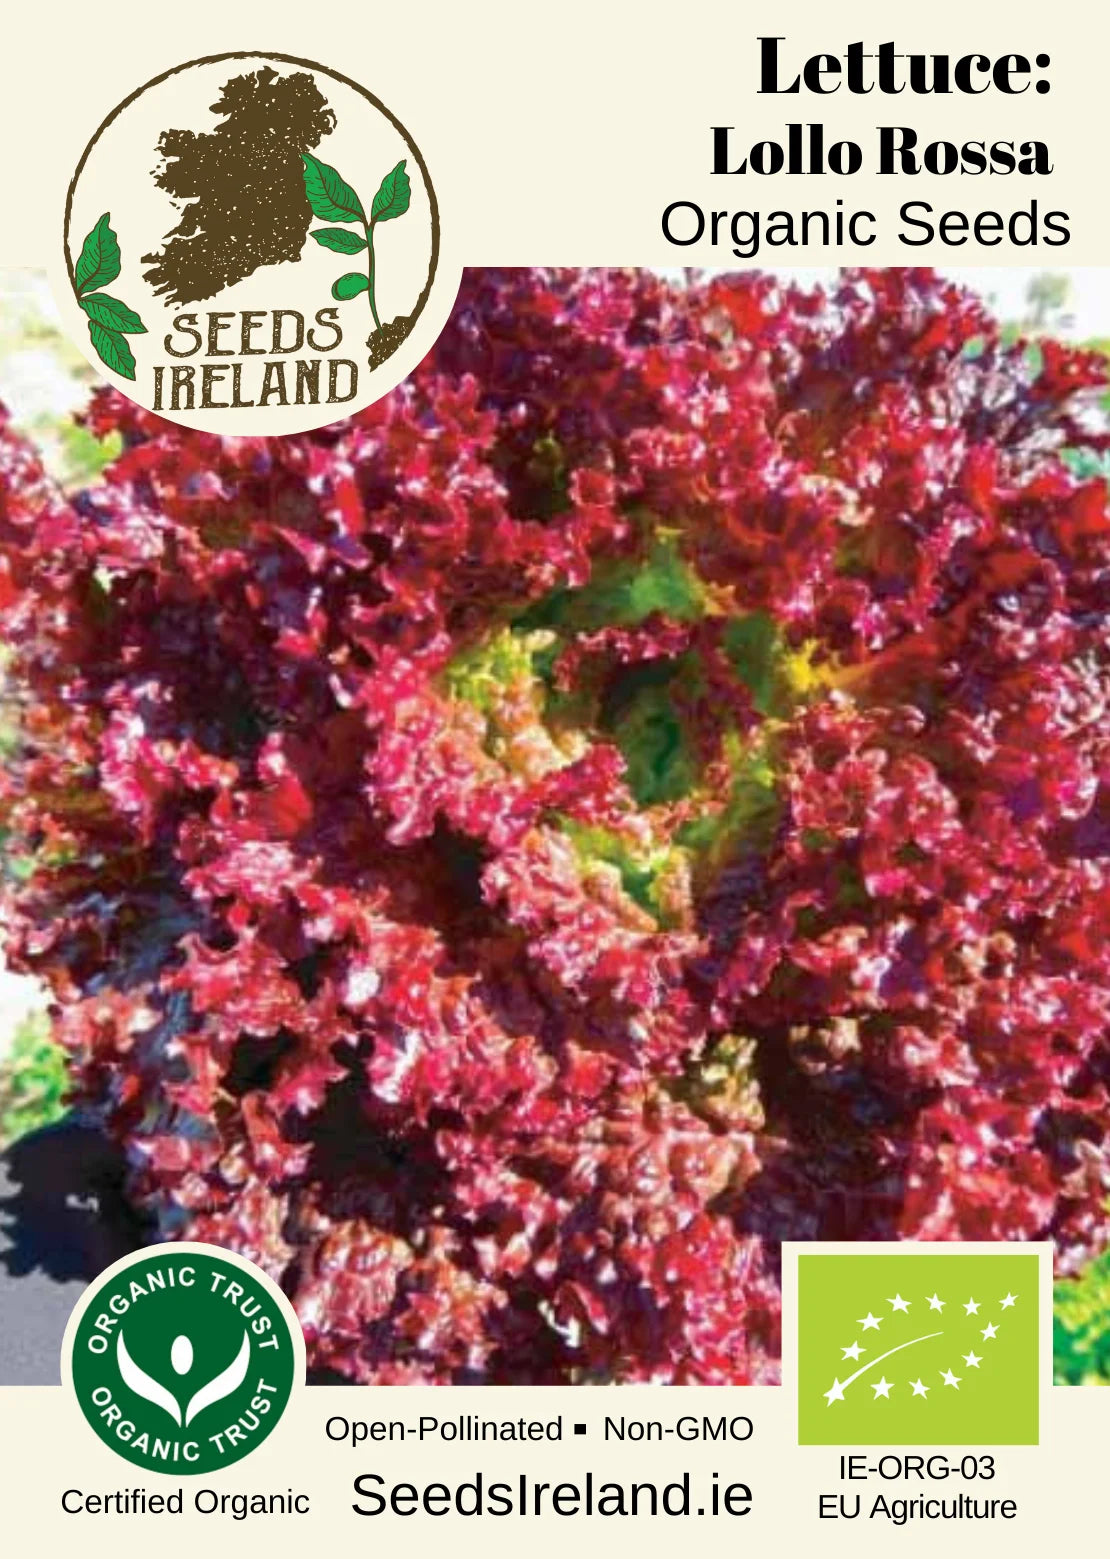 Lettuce: Lollo Rossa Organic Seed